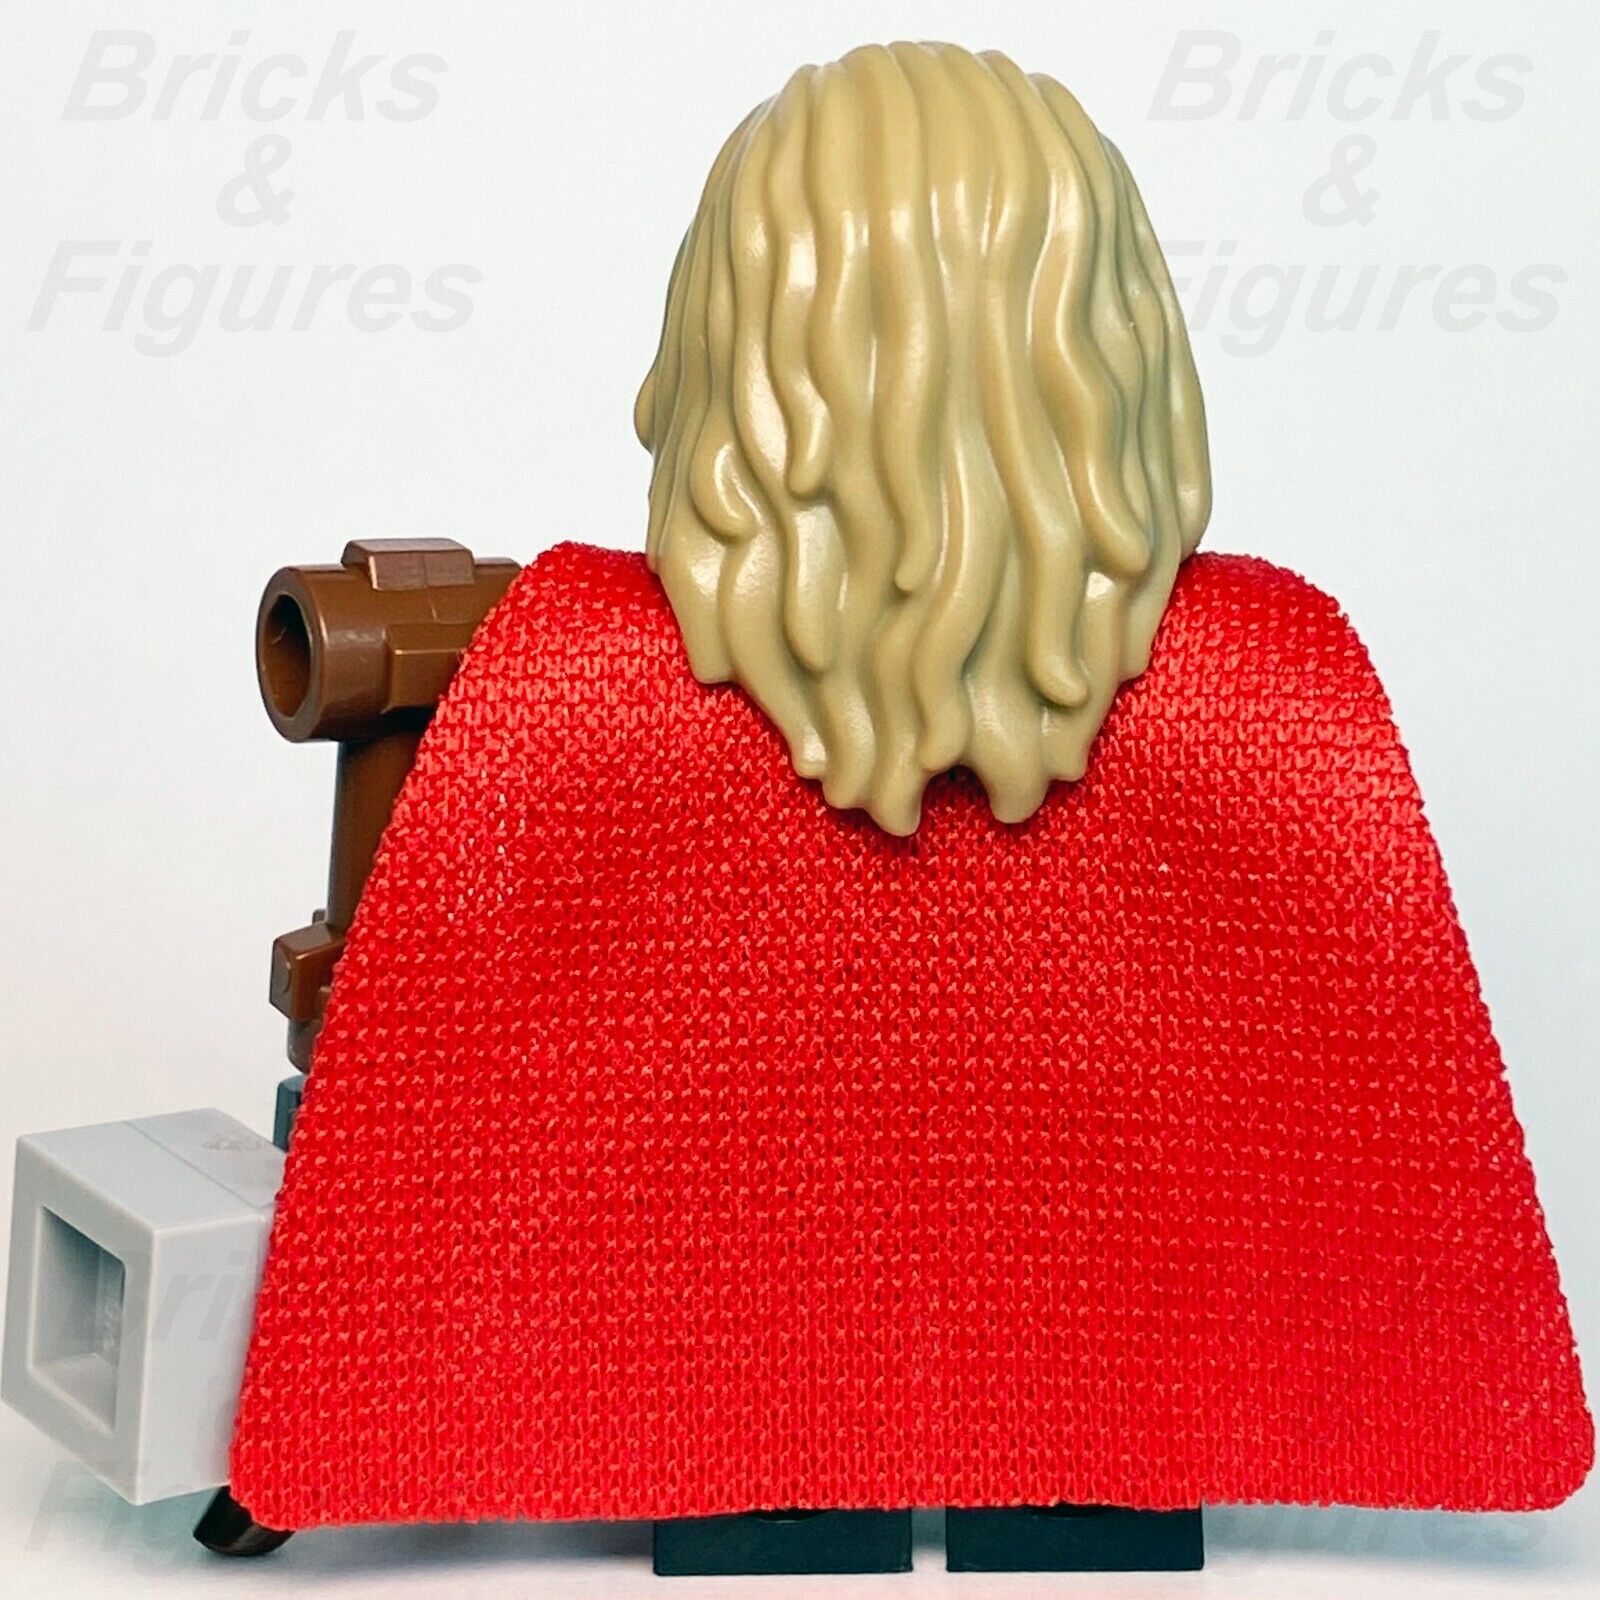 New Marvel Super Heroes LEGO Thor Avengers Endgame Minifigure 76193 sh734 - Bricks & Figures